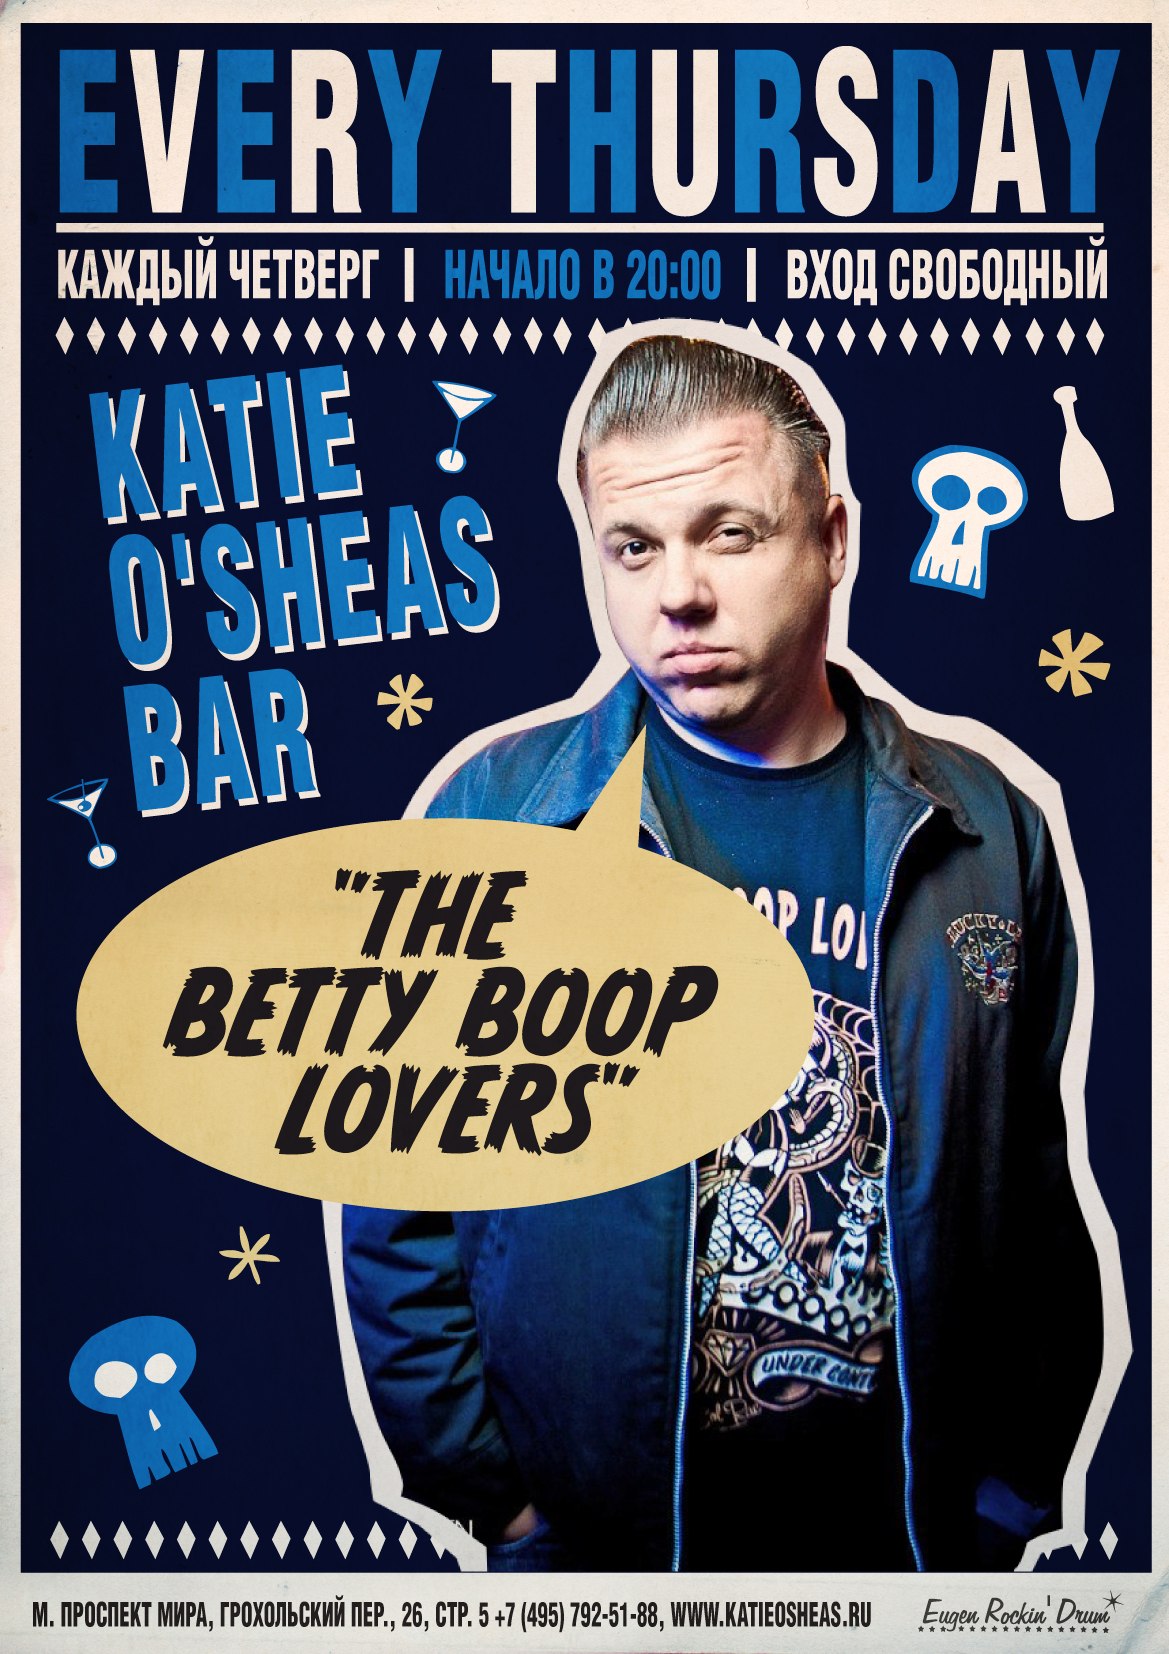 11.10 The BETTY BOOP LOVERS "Katie O'Shea's Bar"